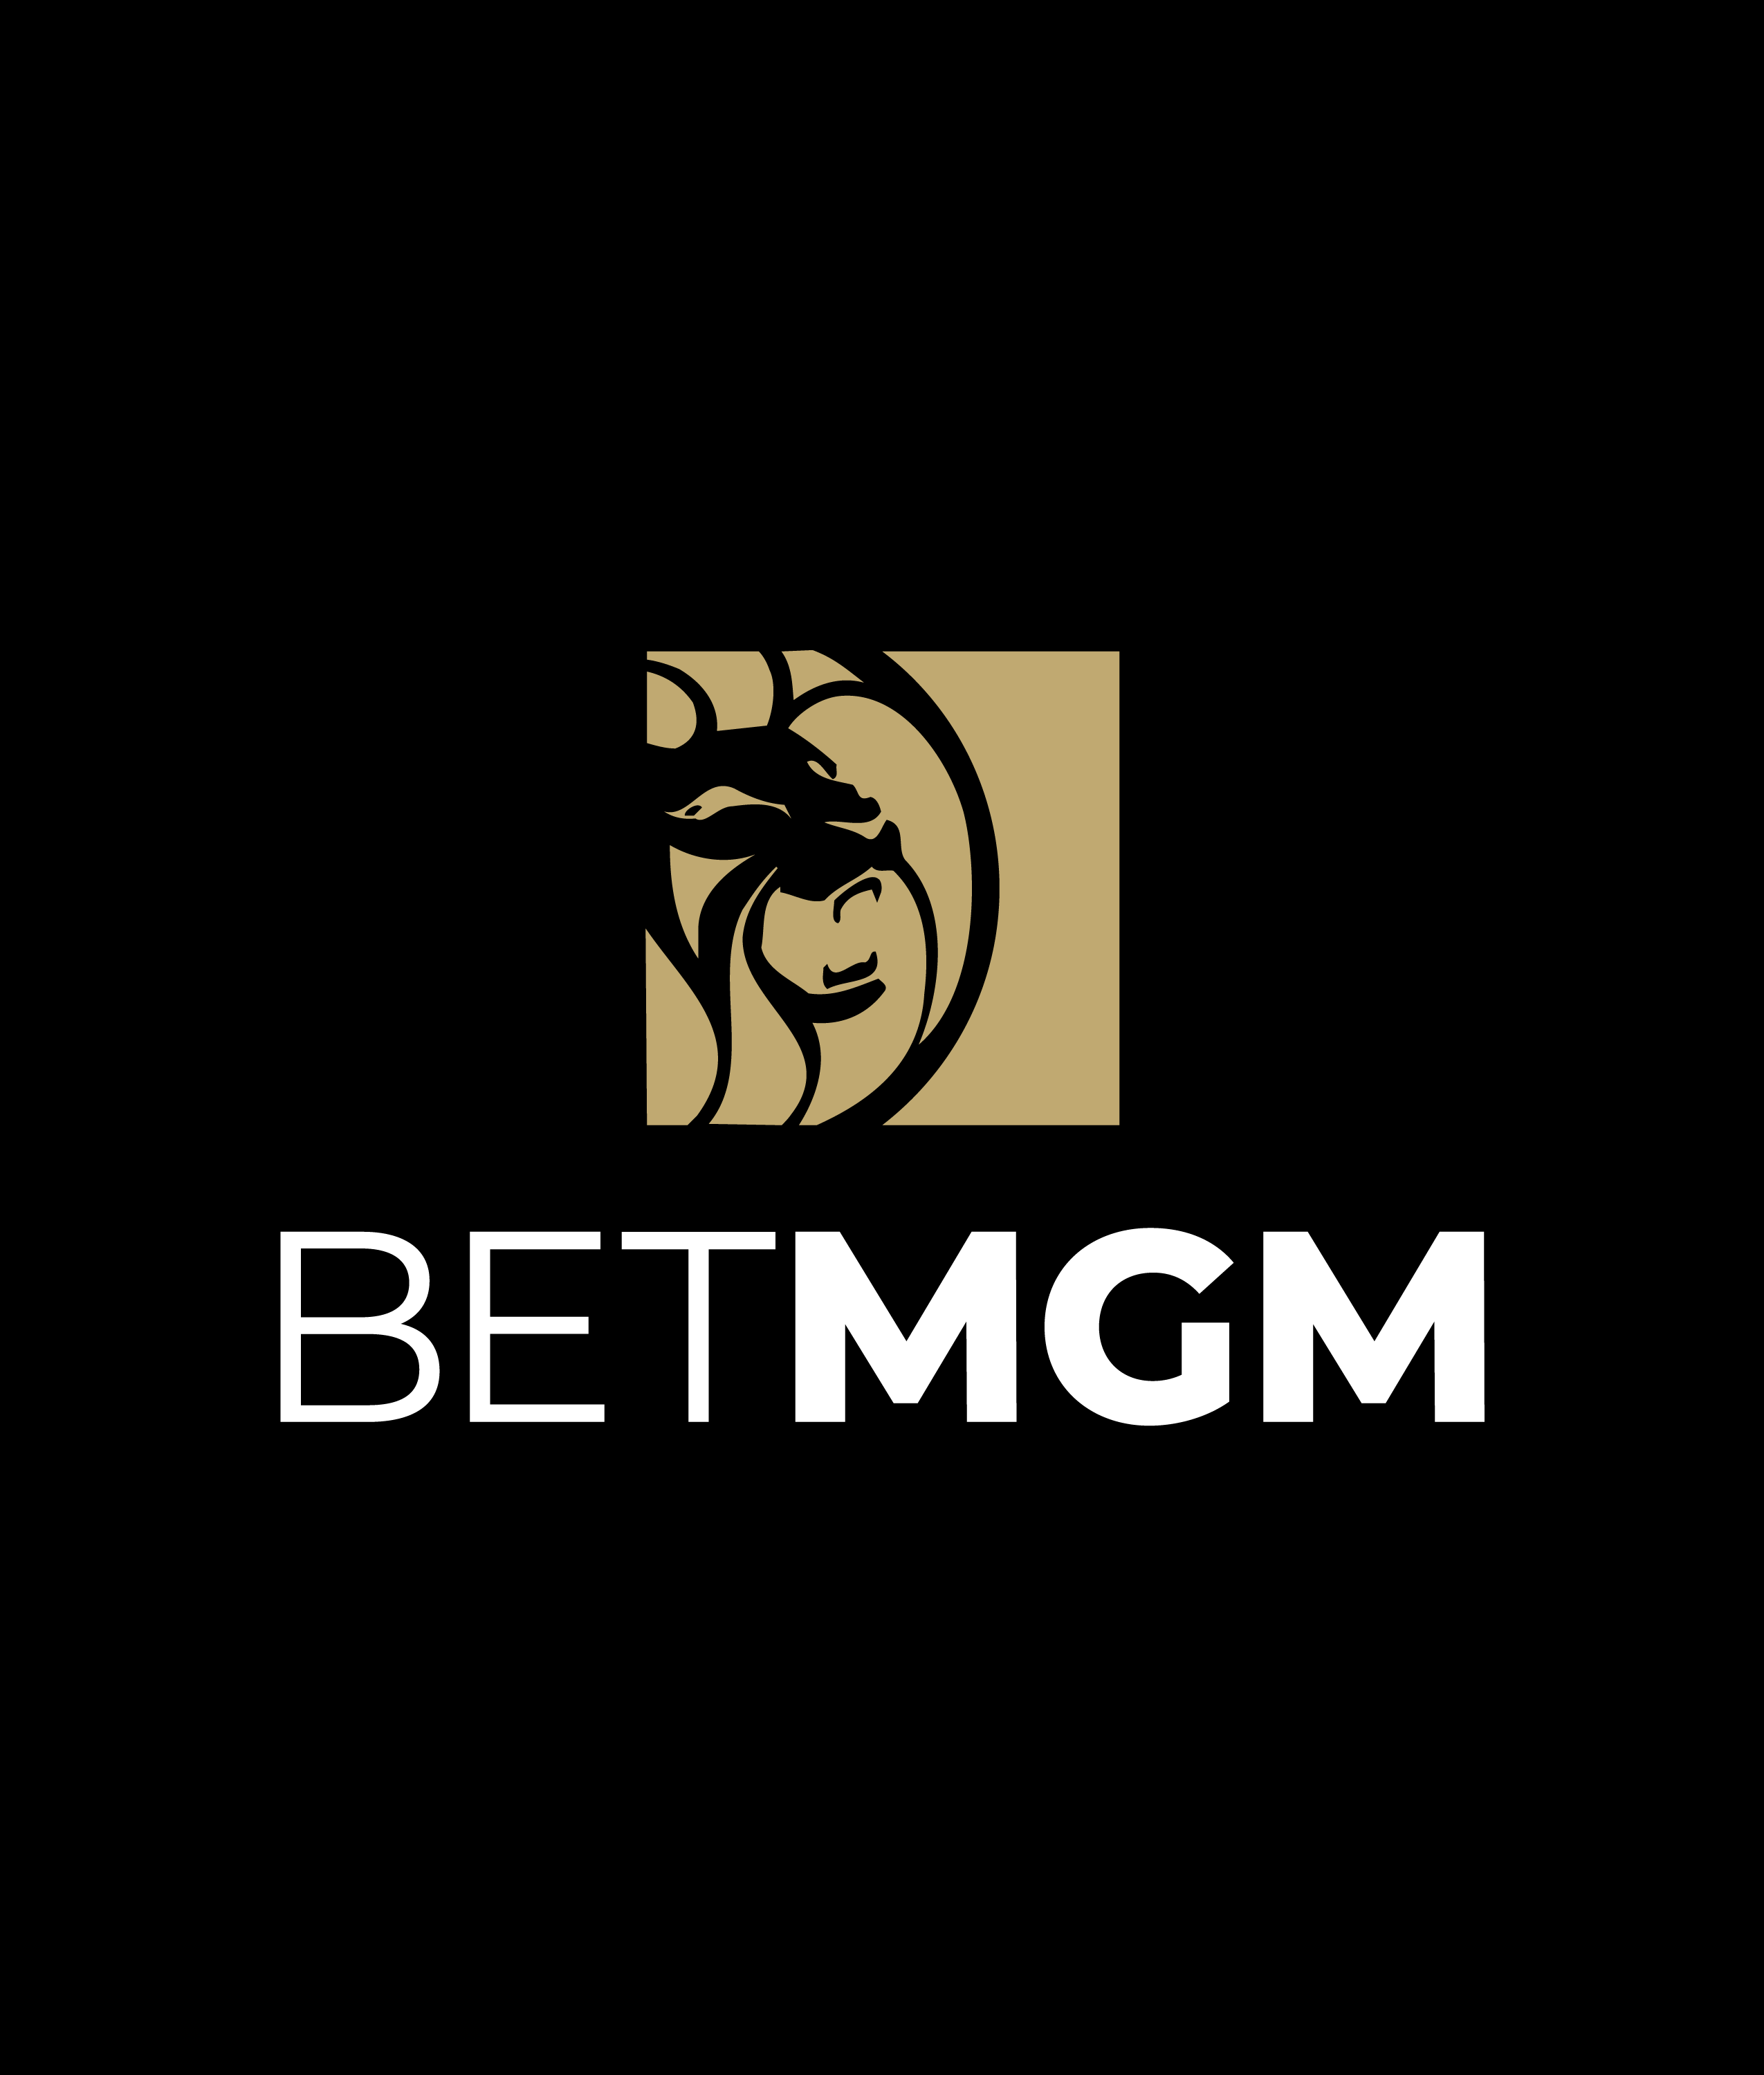 Mgm grand sportsbook app online betting websites in nigeria africa